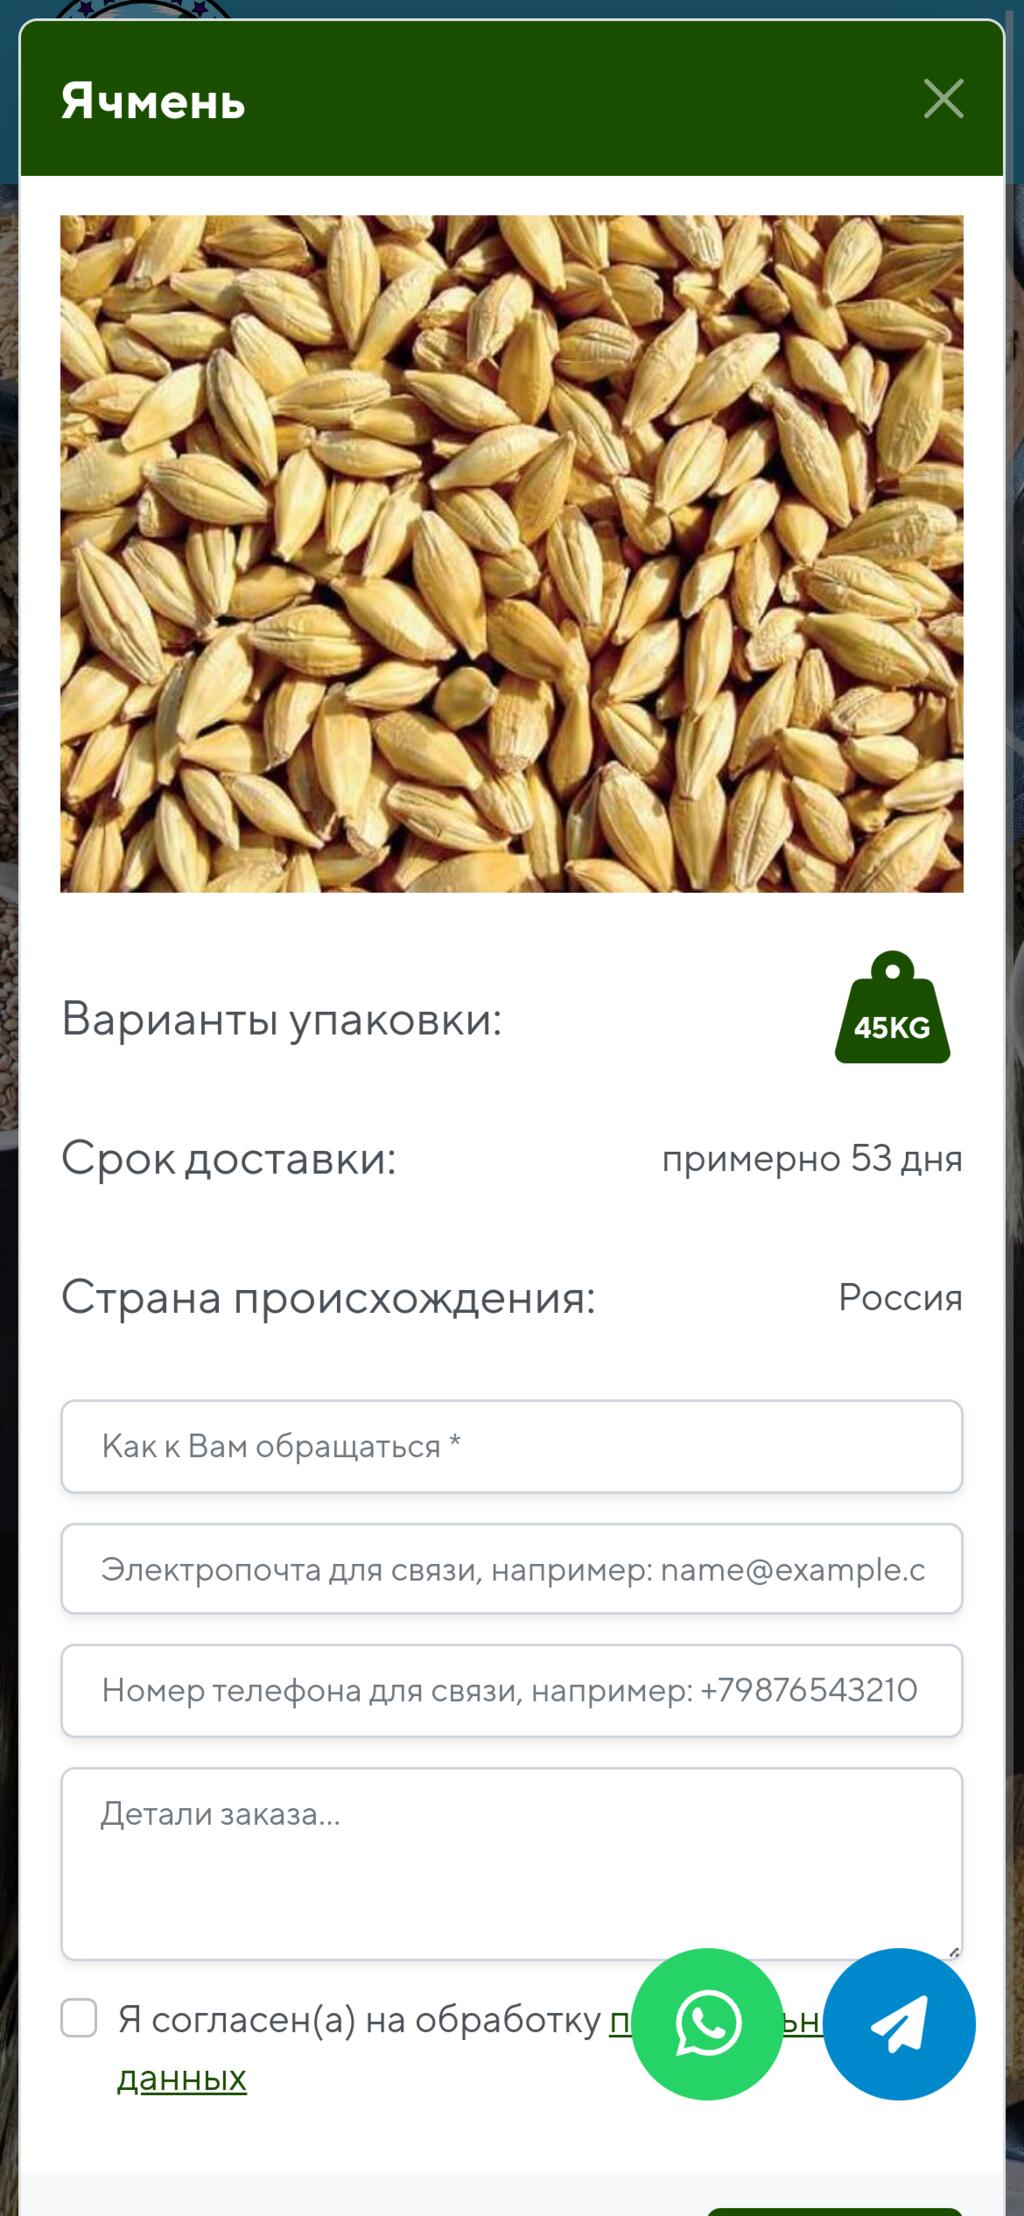 Bangtao Import Export Co., LTD - Website-catalog Groats Wholesale from Russia - Slide 6